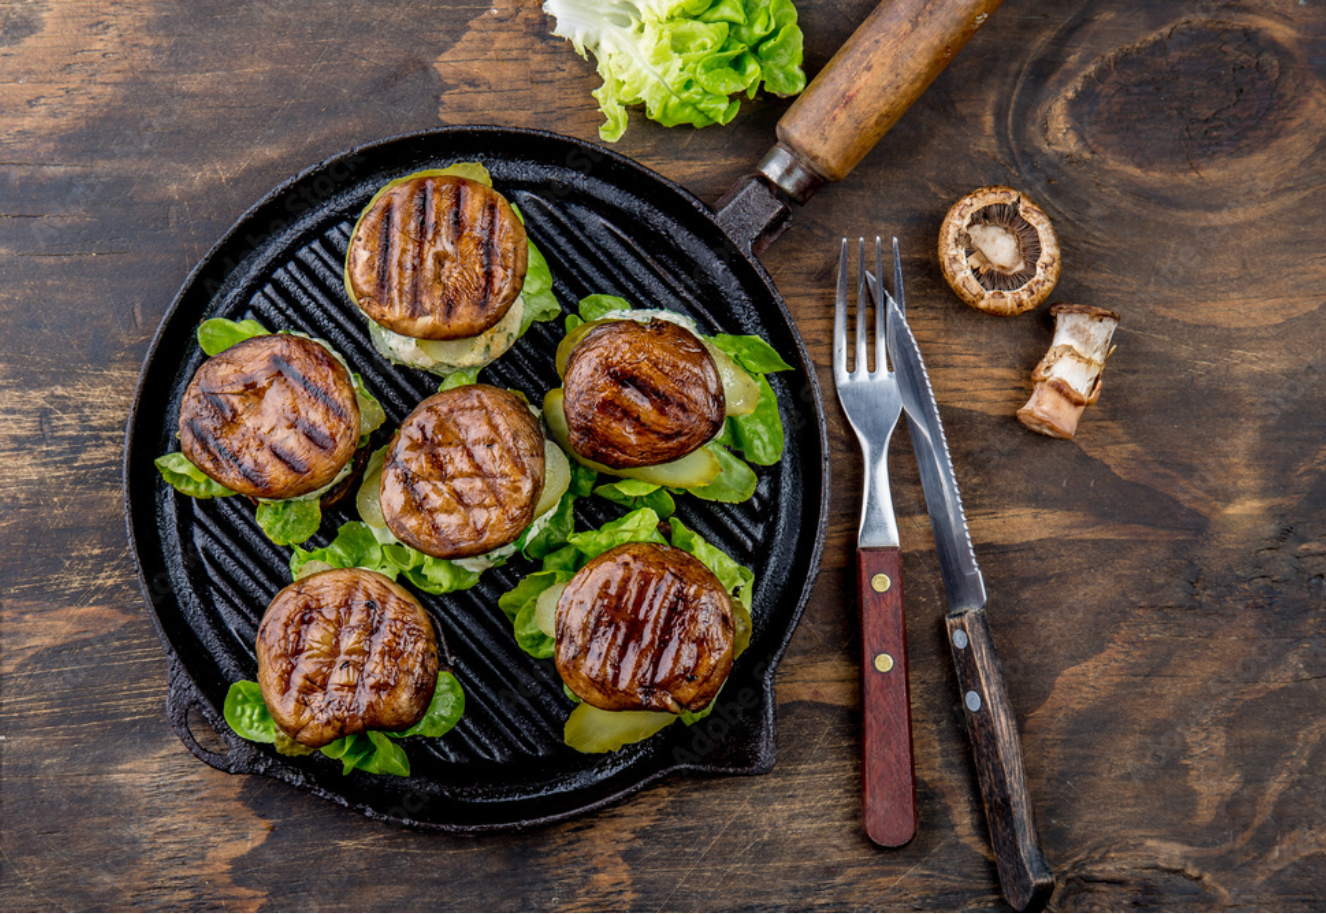 Vegetarian BBQ: Grilled Portobello Mushroom Burgers with Guac